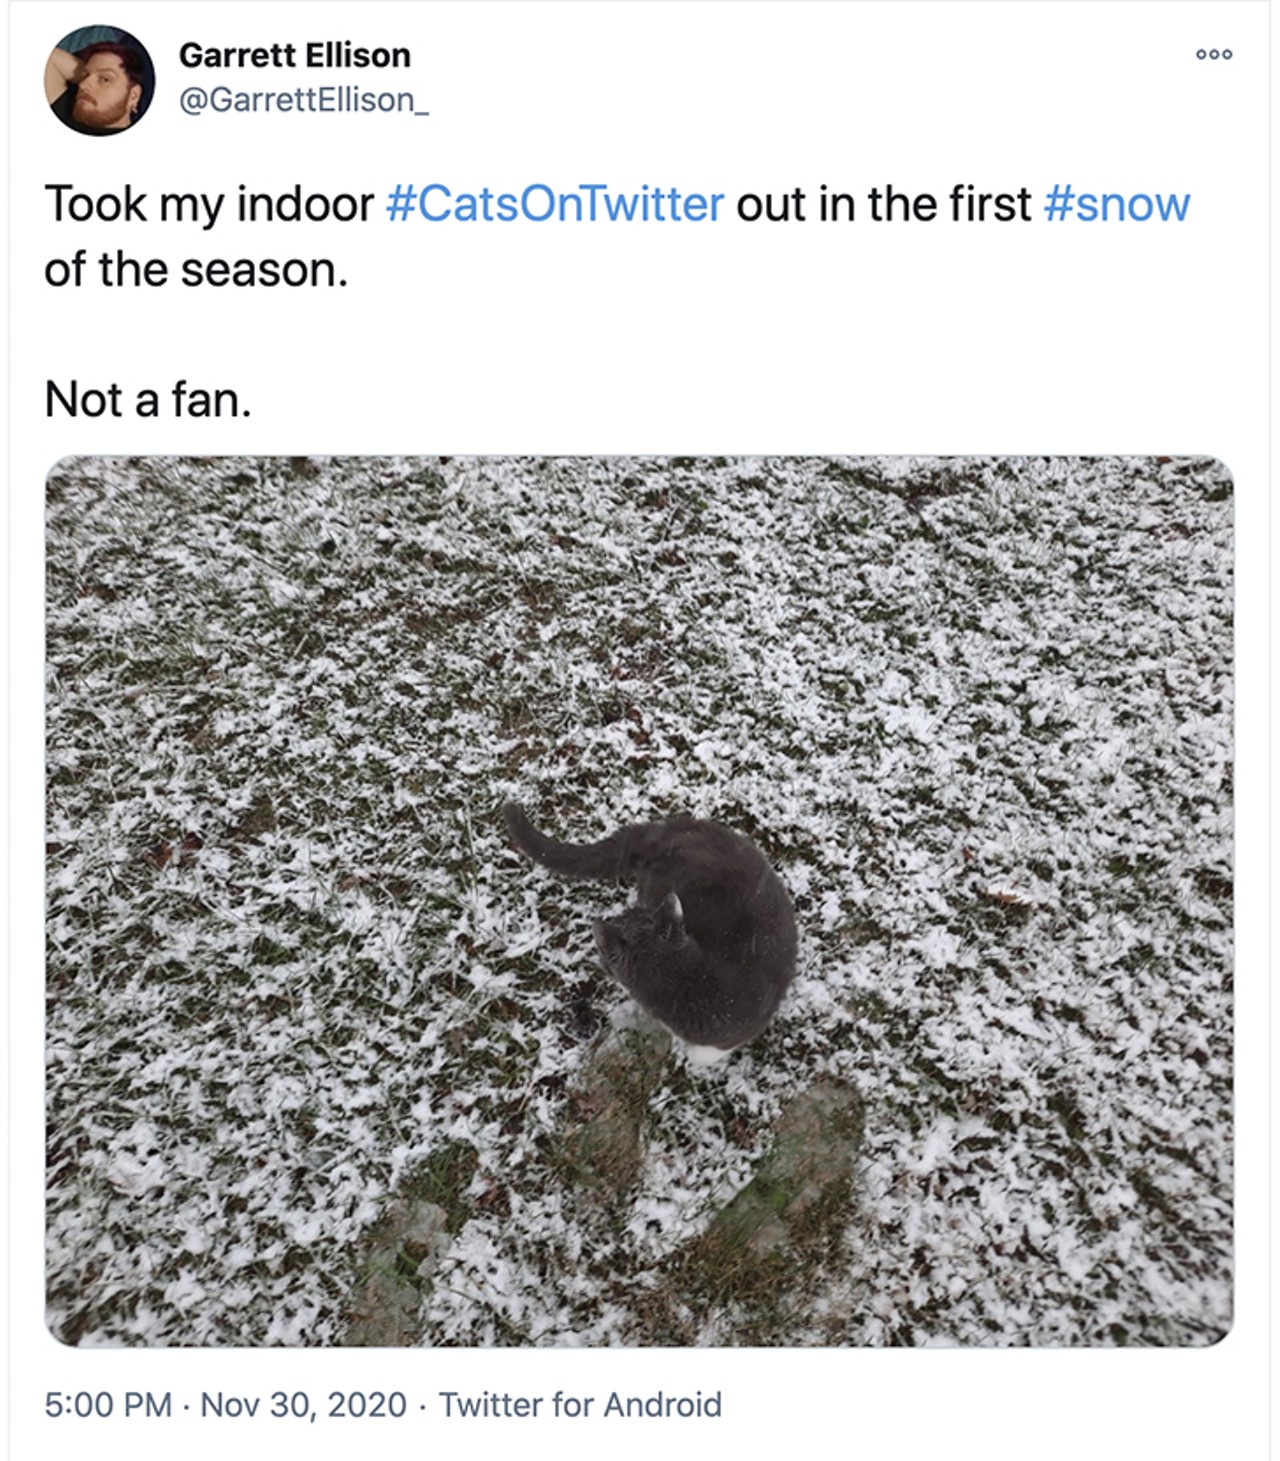 Cincinnati's Twitter Transformed into a Winter Wonderland After Last Night's Snow